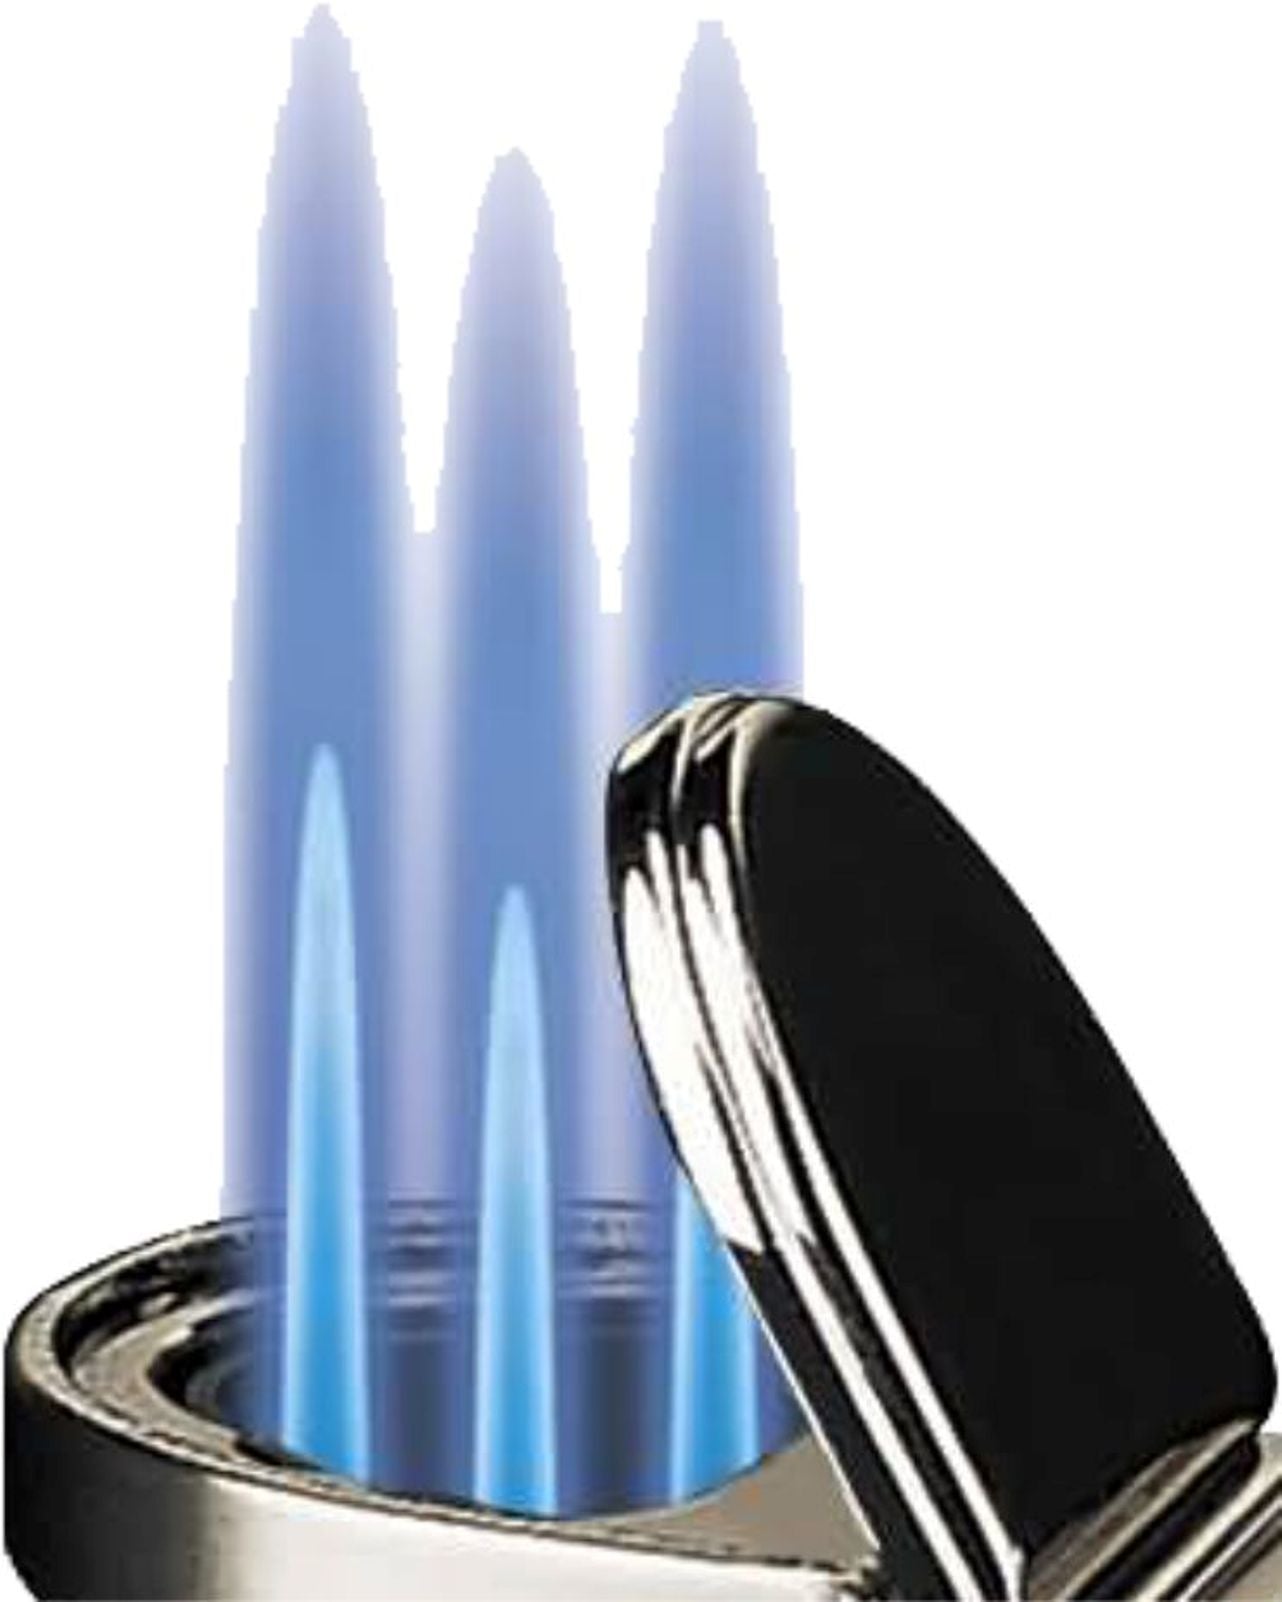 Sikaro Cyclone Triple Torch Lighter w/cigar punch 06-06-302 Gunmetal